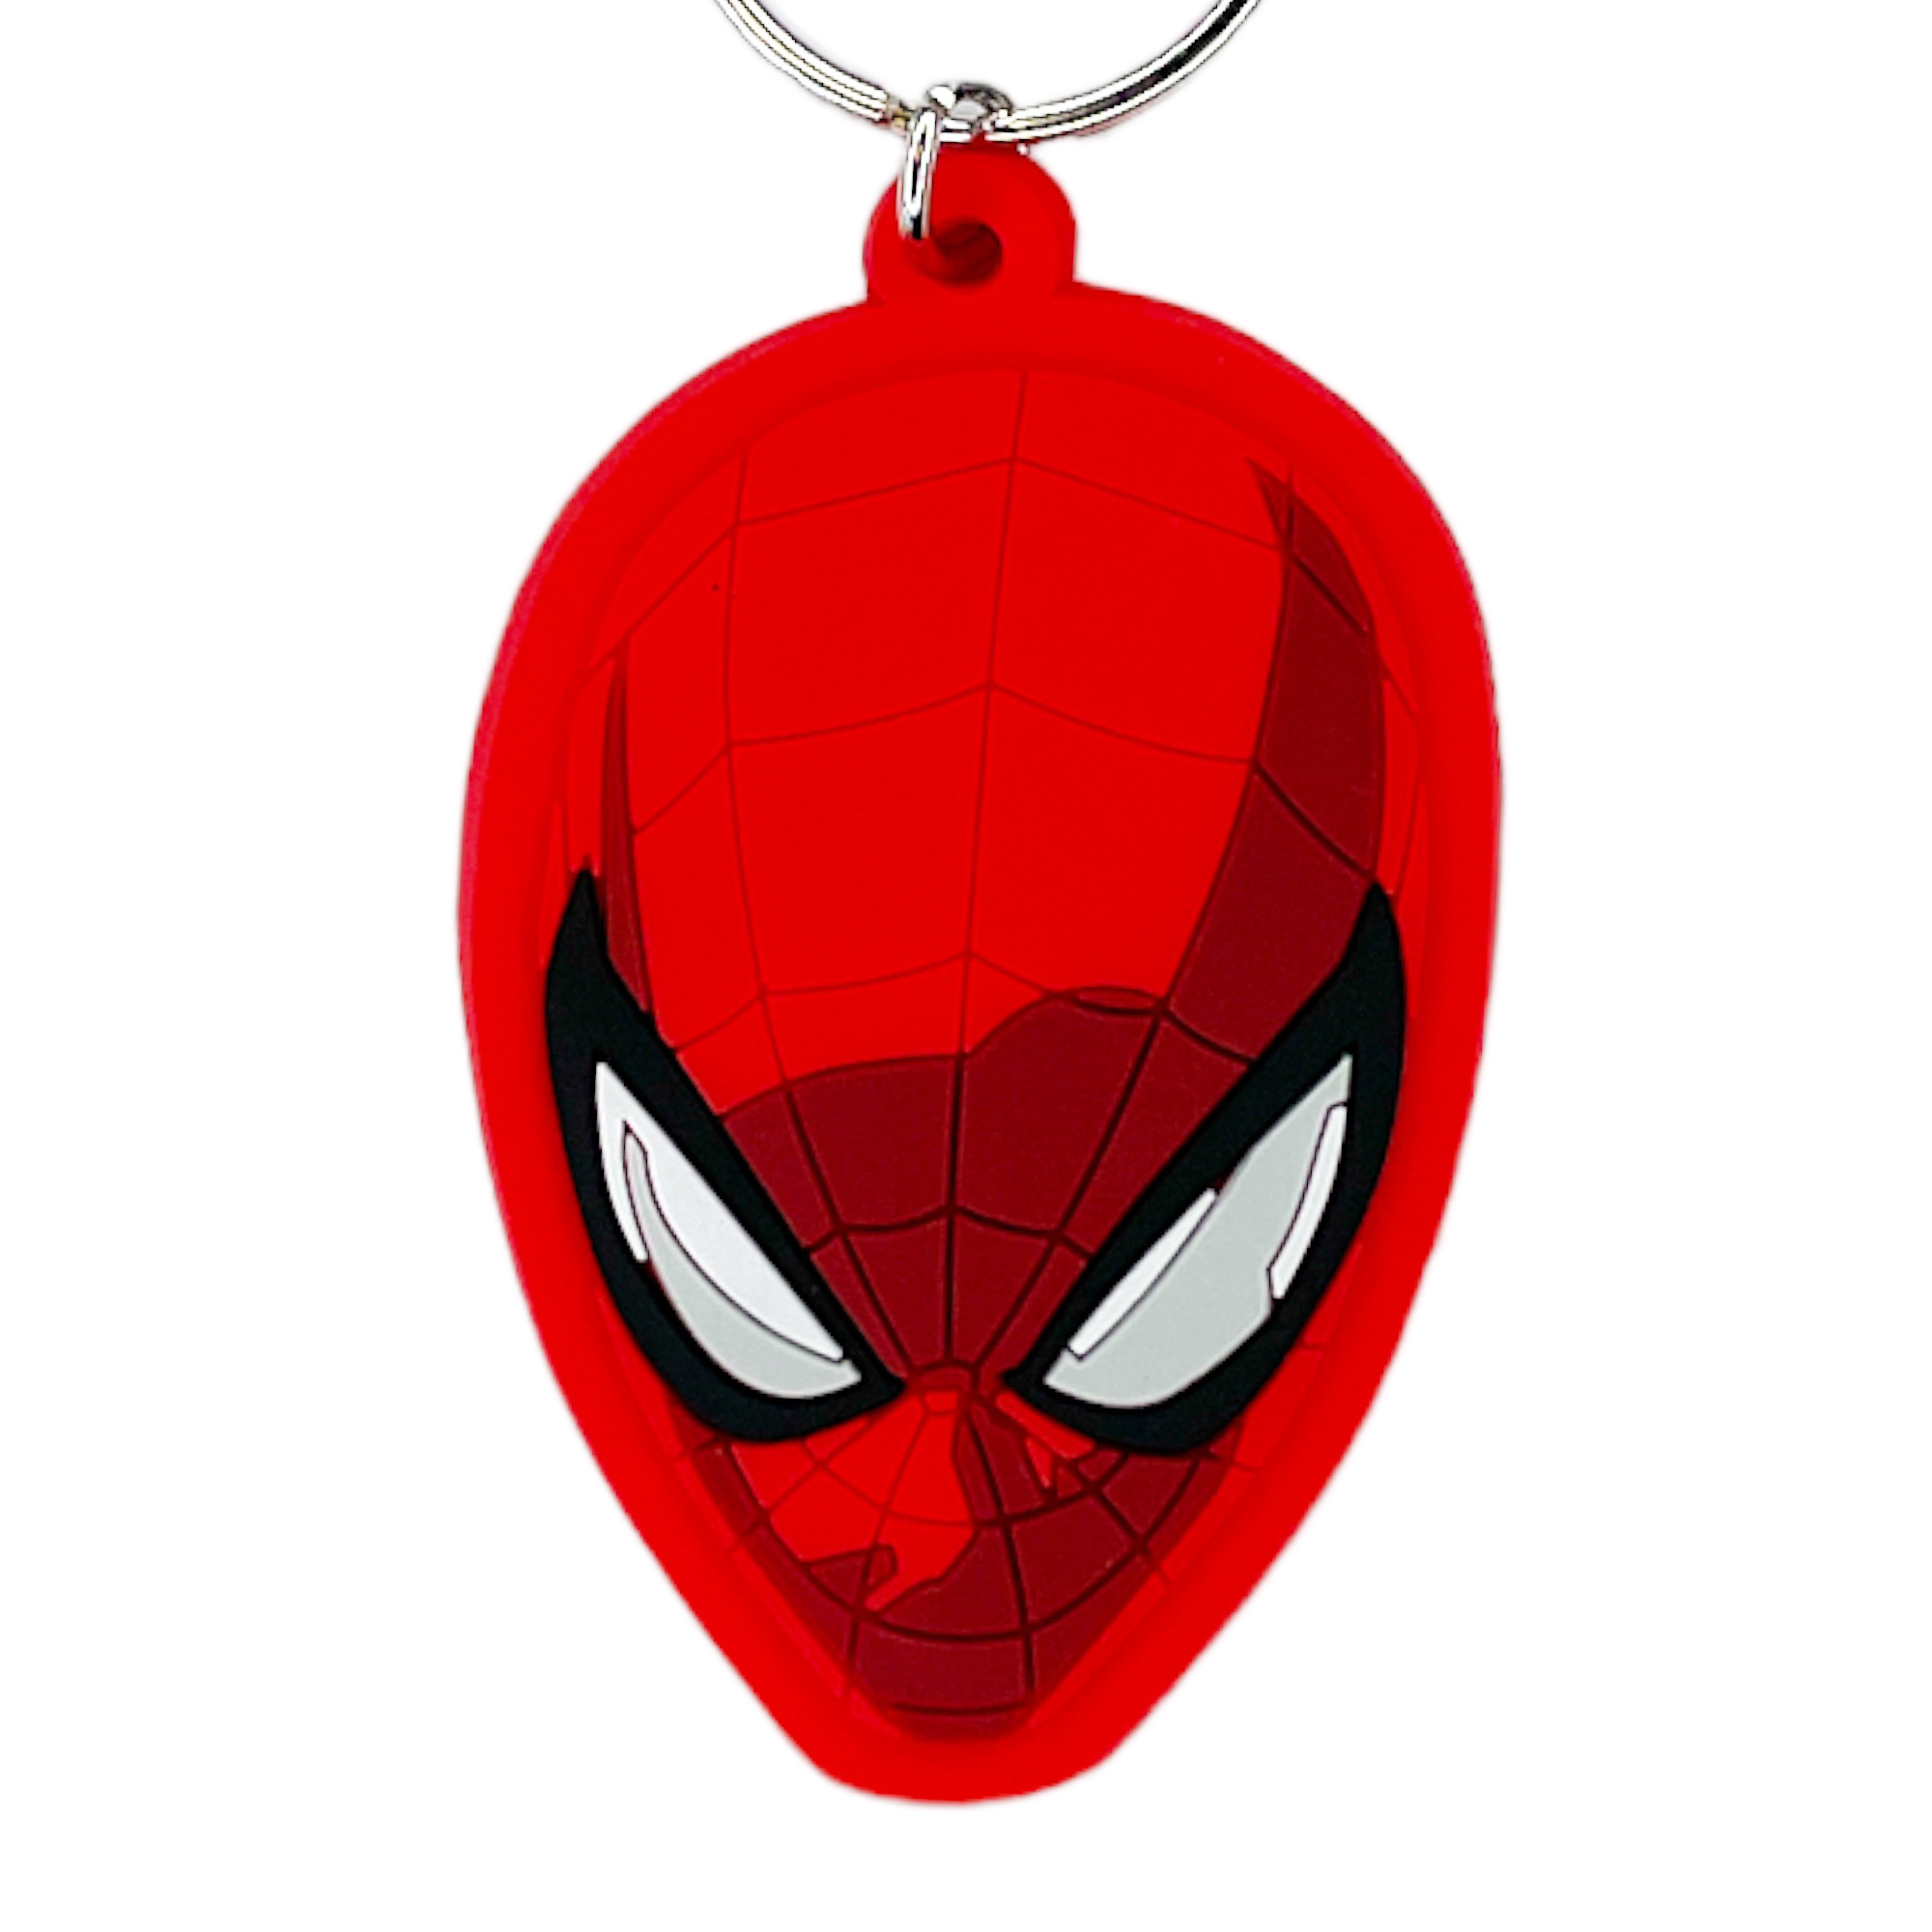 Spider-Man Gummi Schlüsselanhänger - Marvel